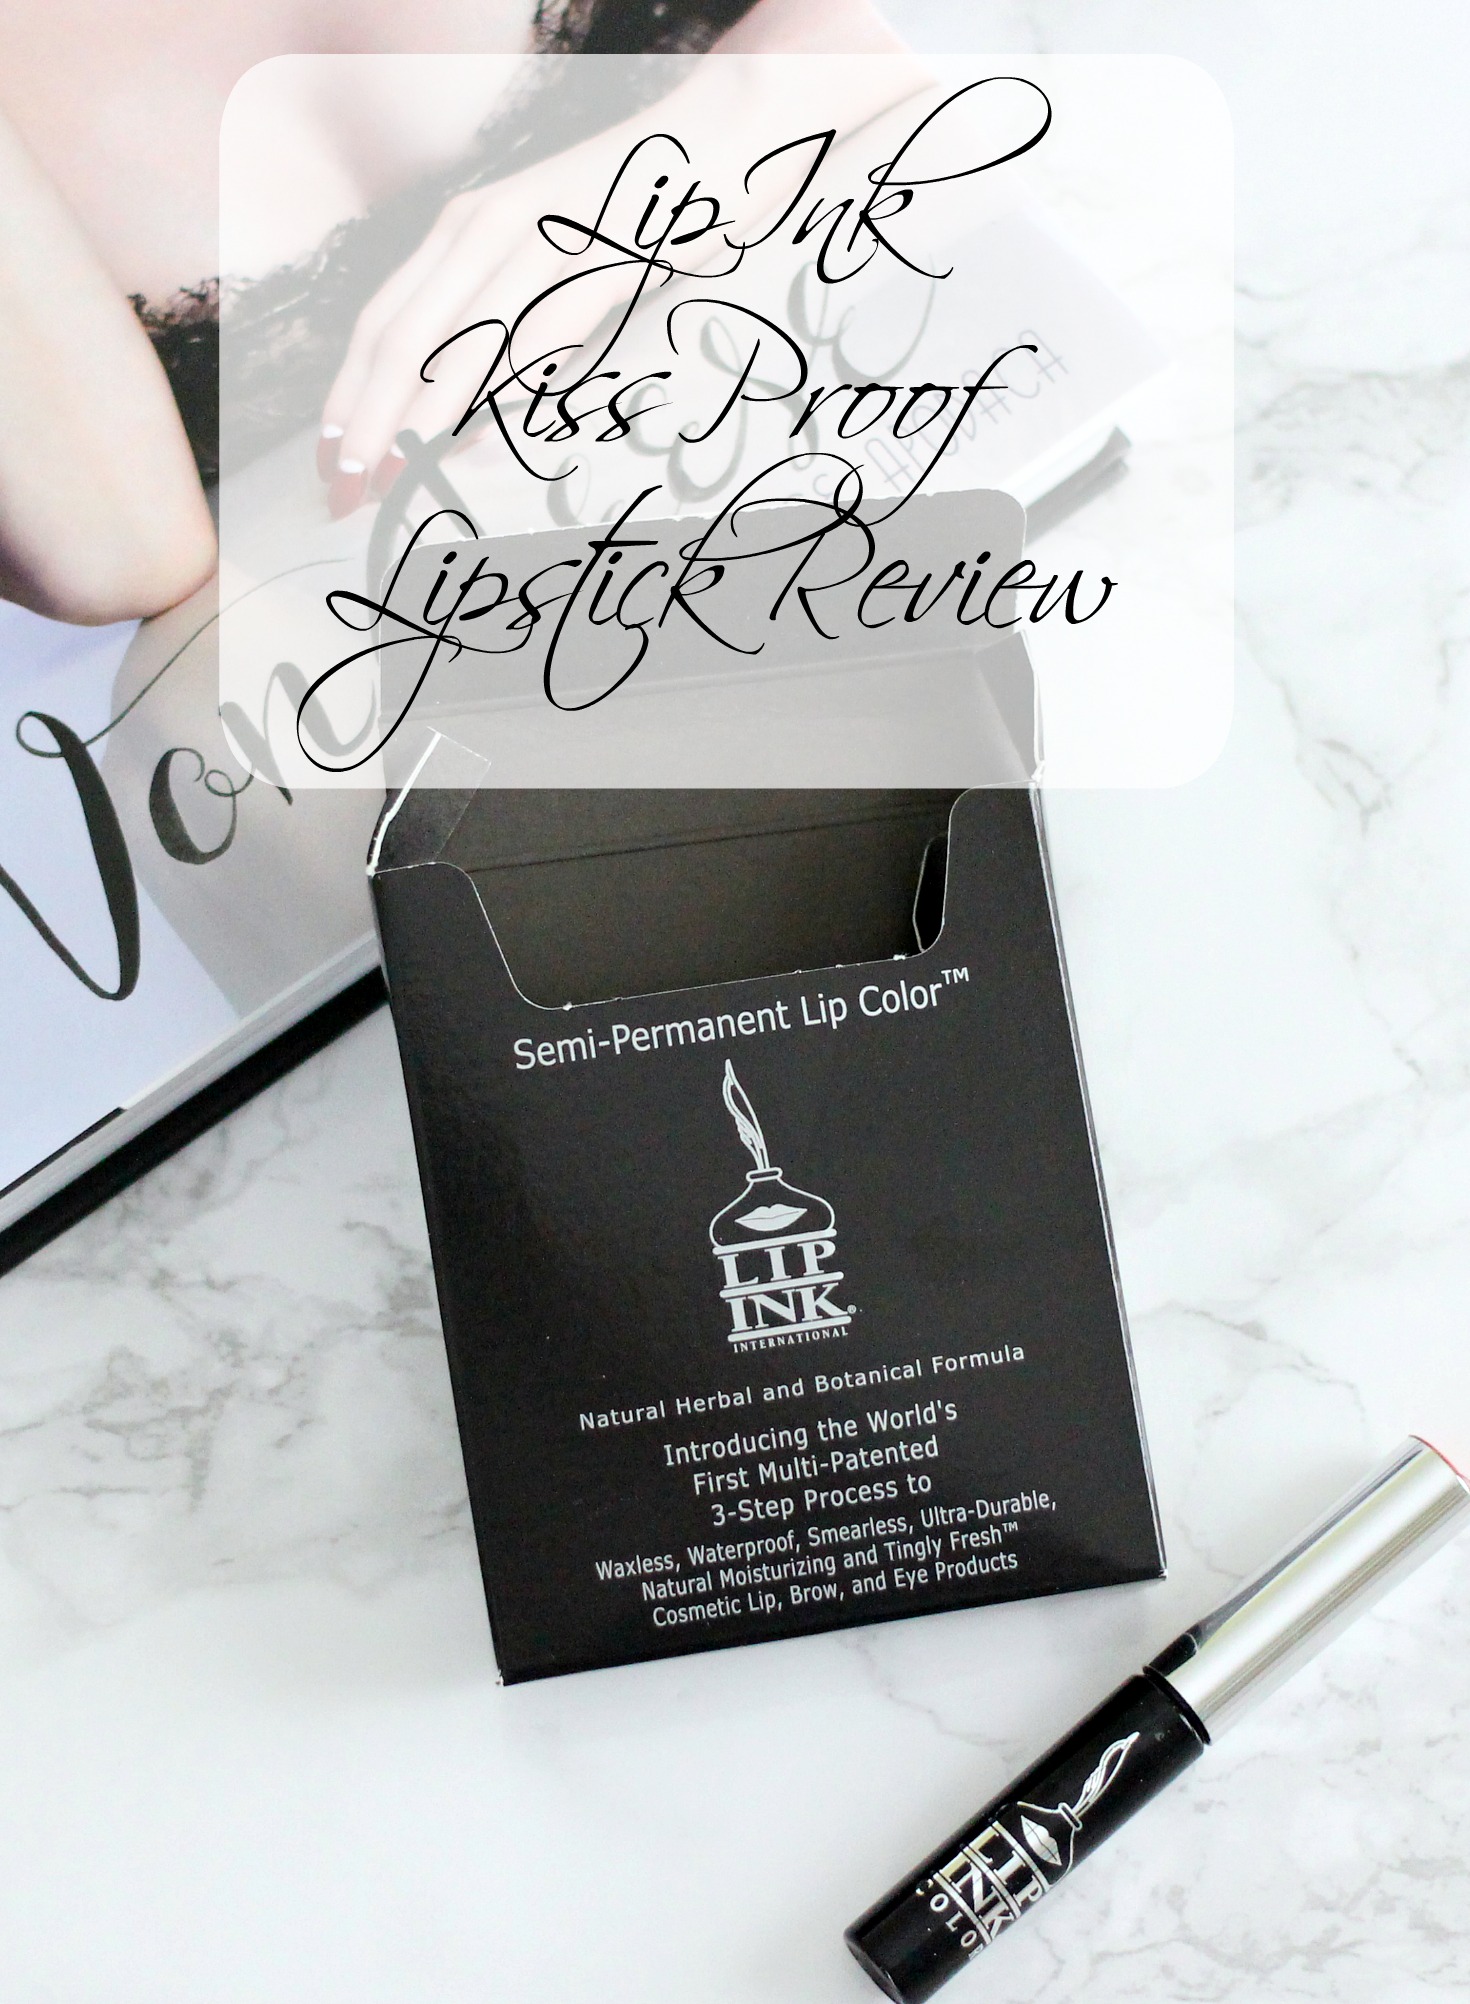 LipInk Kiss Proof Lipstick Review